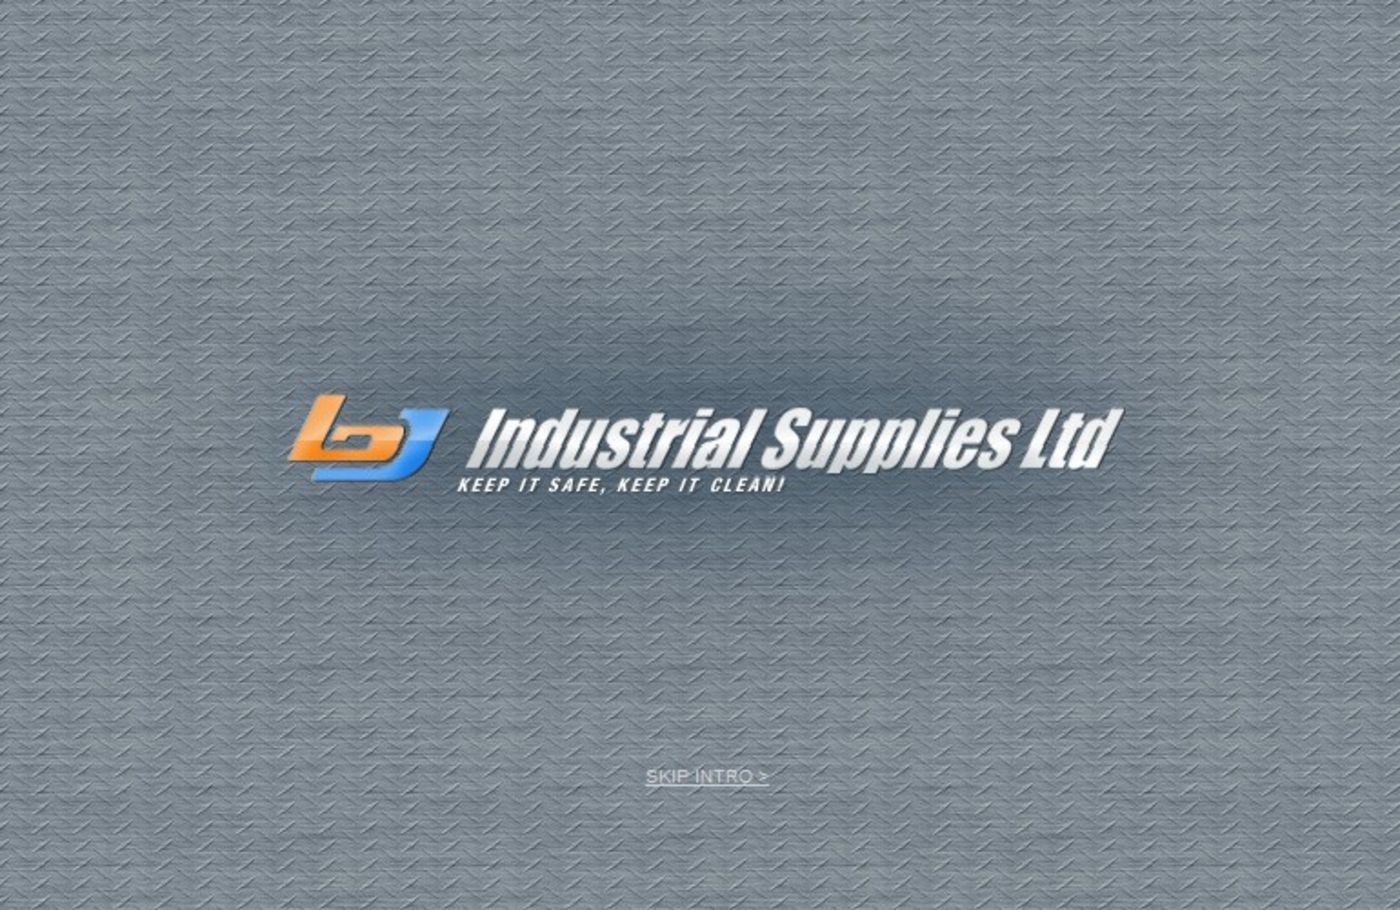 BJ Industrial Supplies Welcome